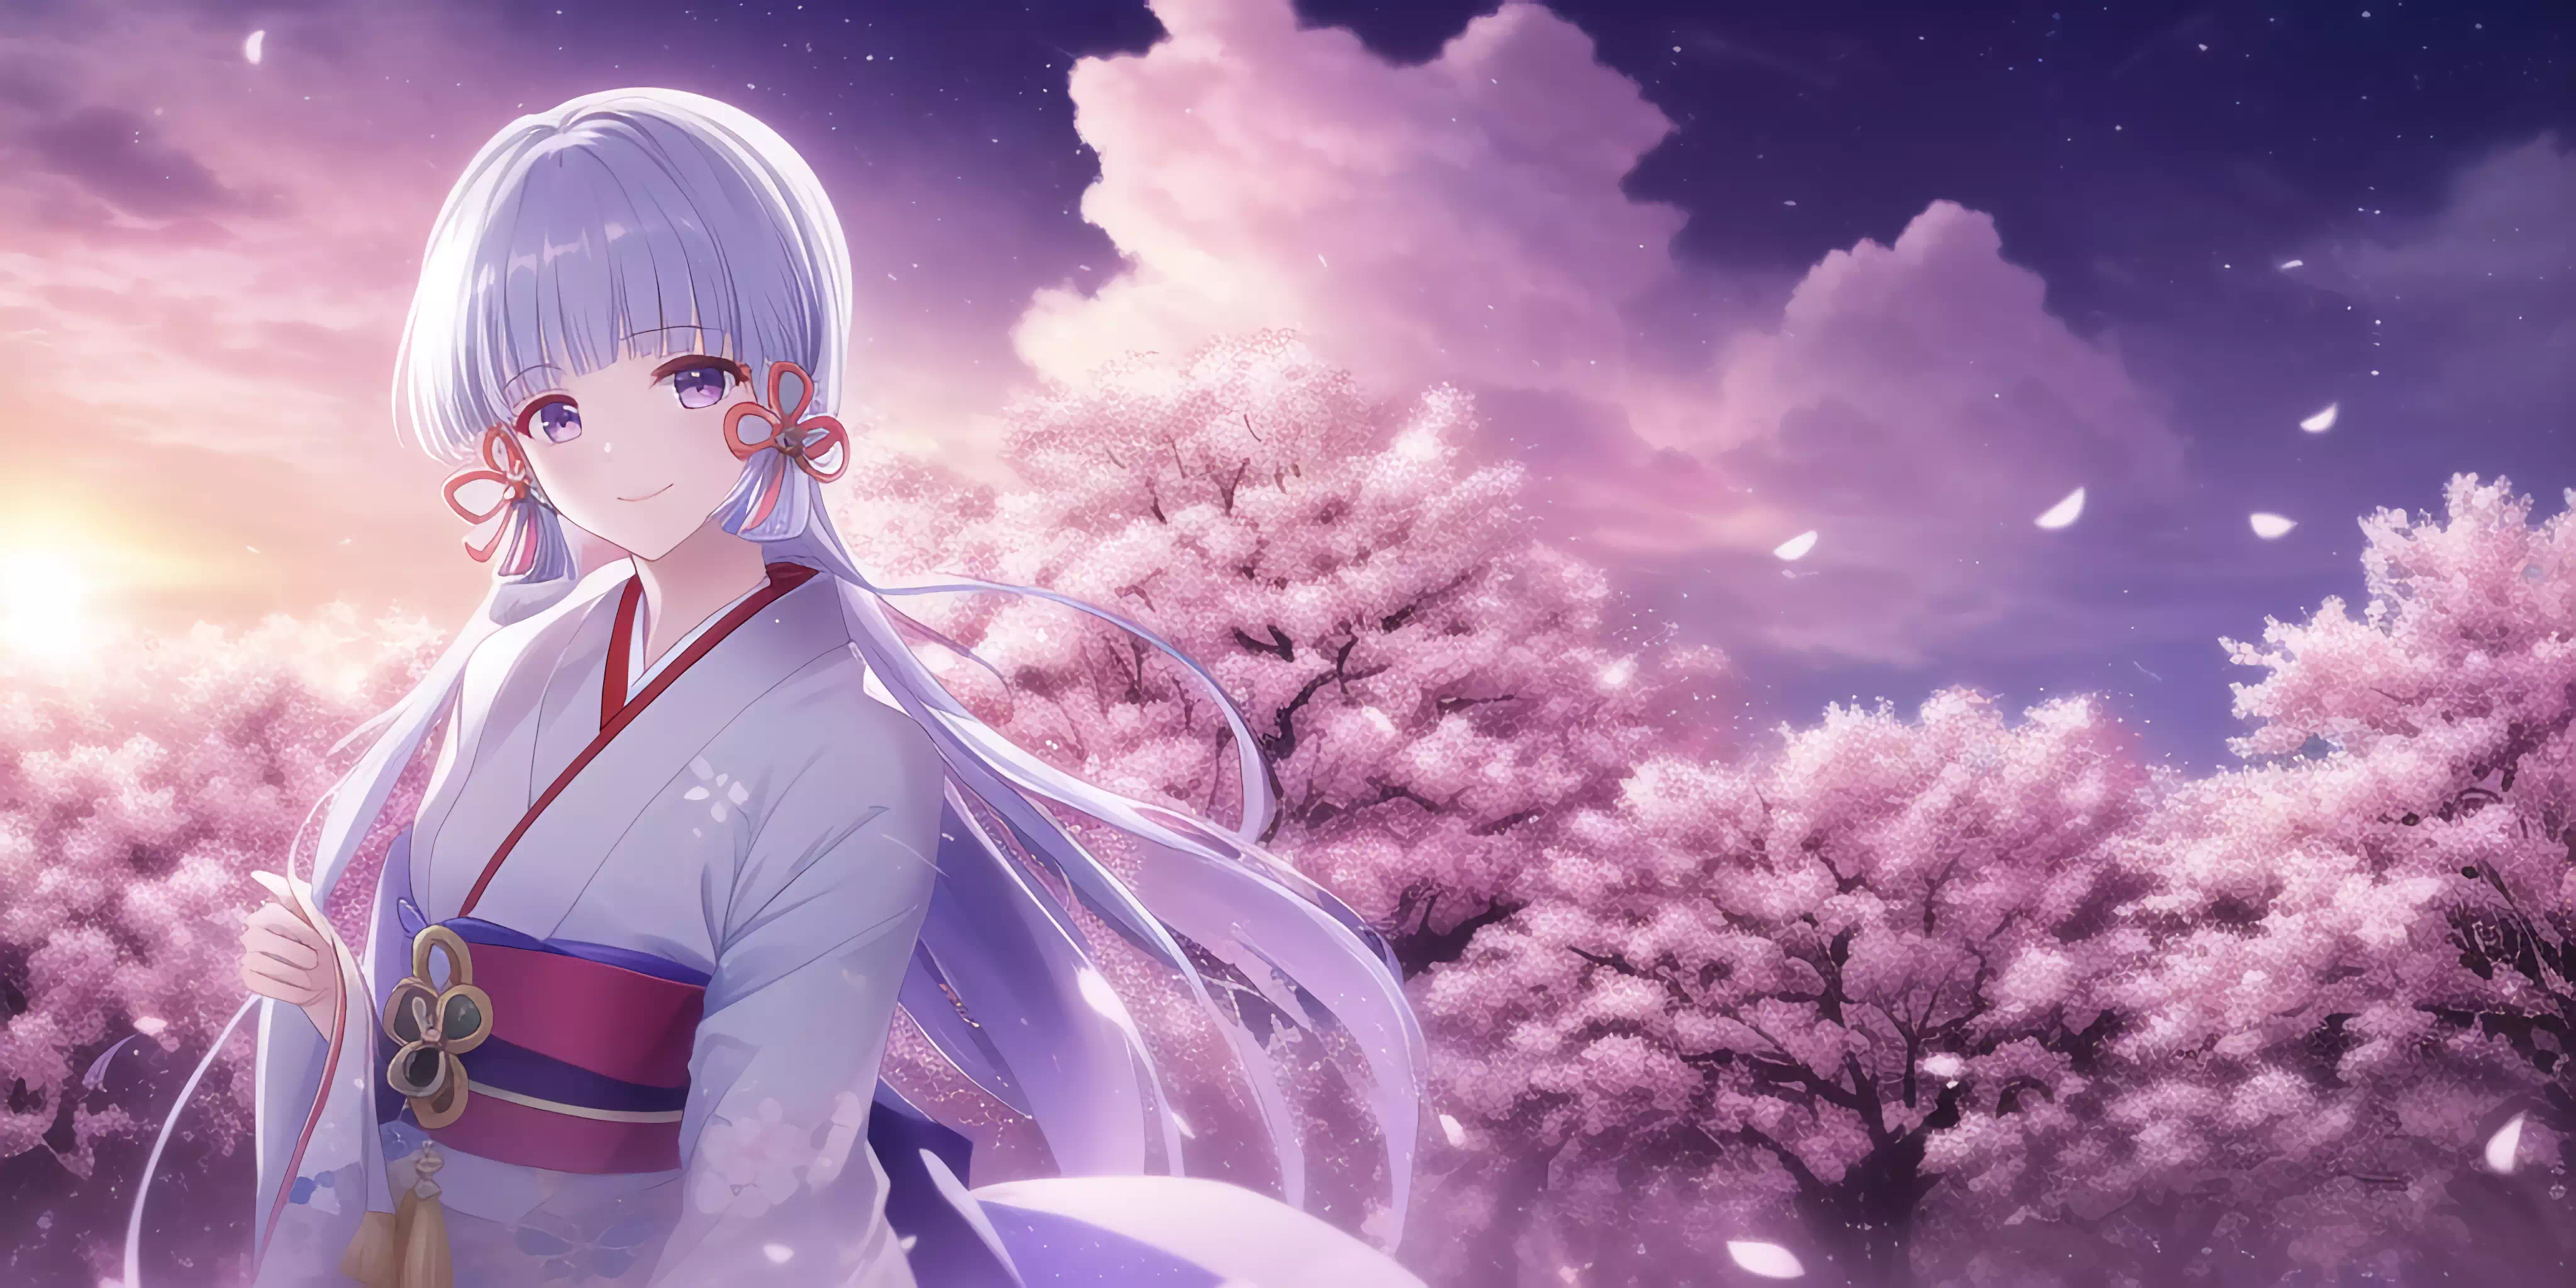 Kimono Ayaka under Sakura